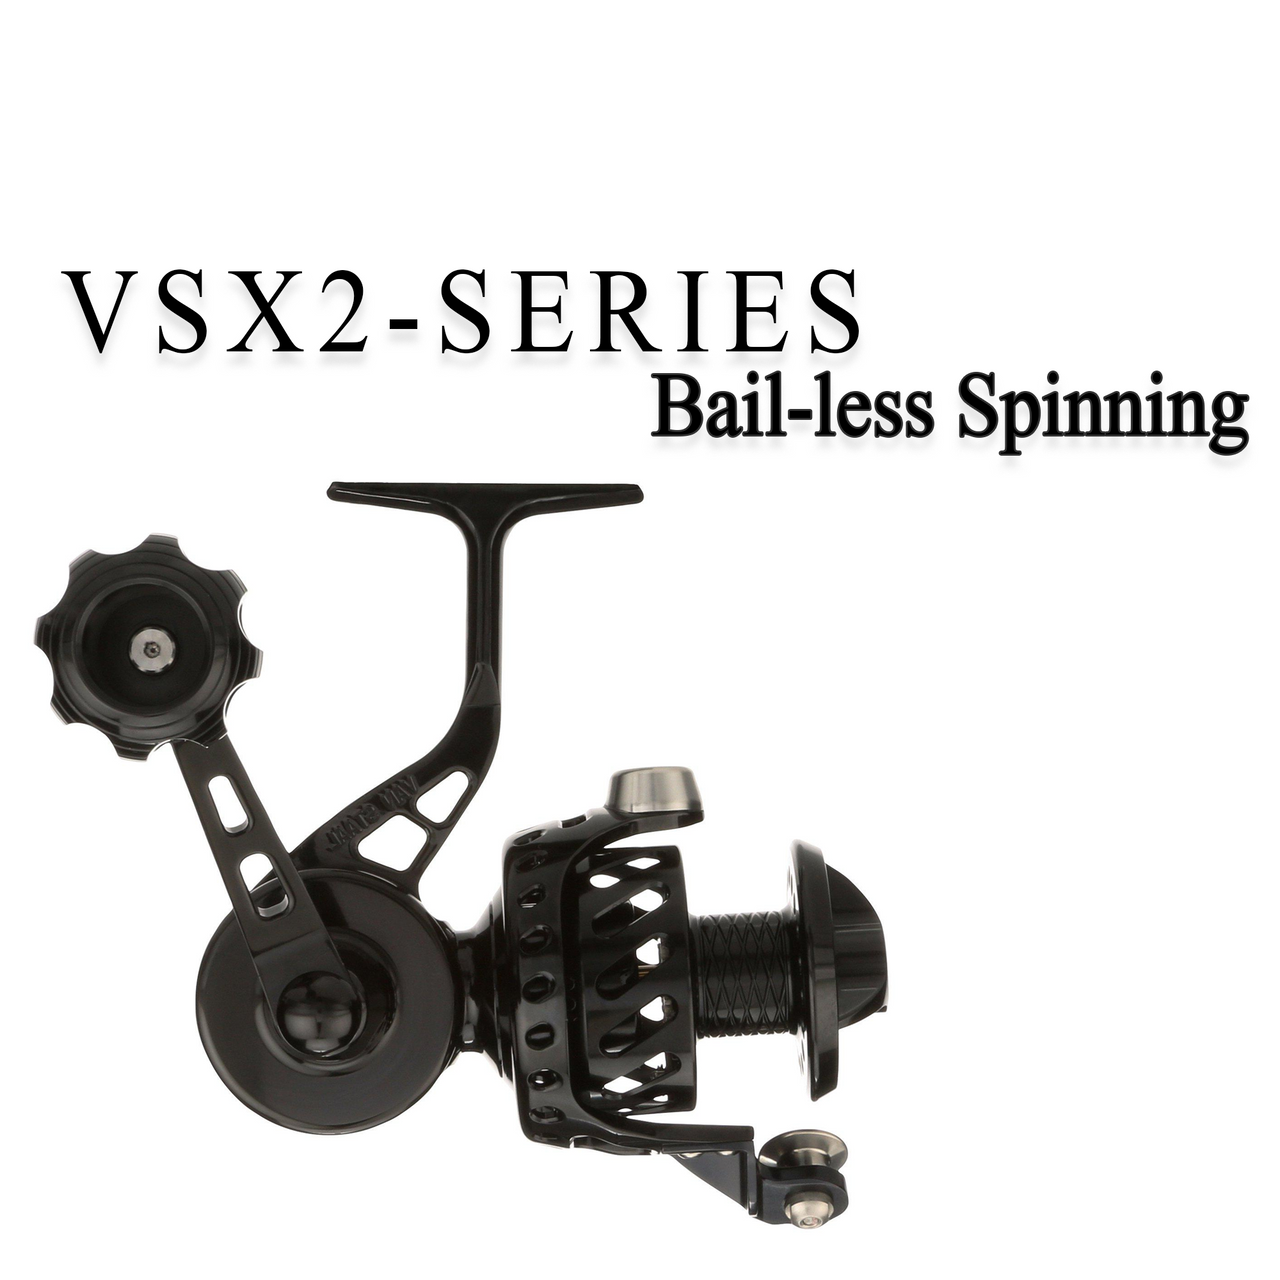 Van Staal Vs X2 Bail-less Spinning Reel VS151SX2